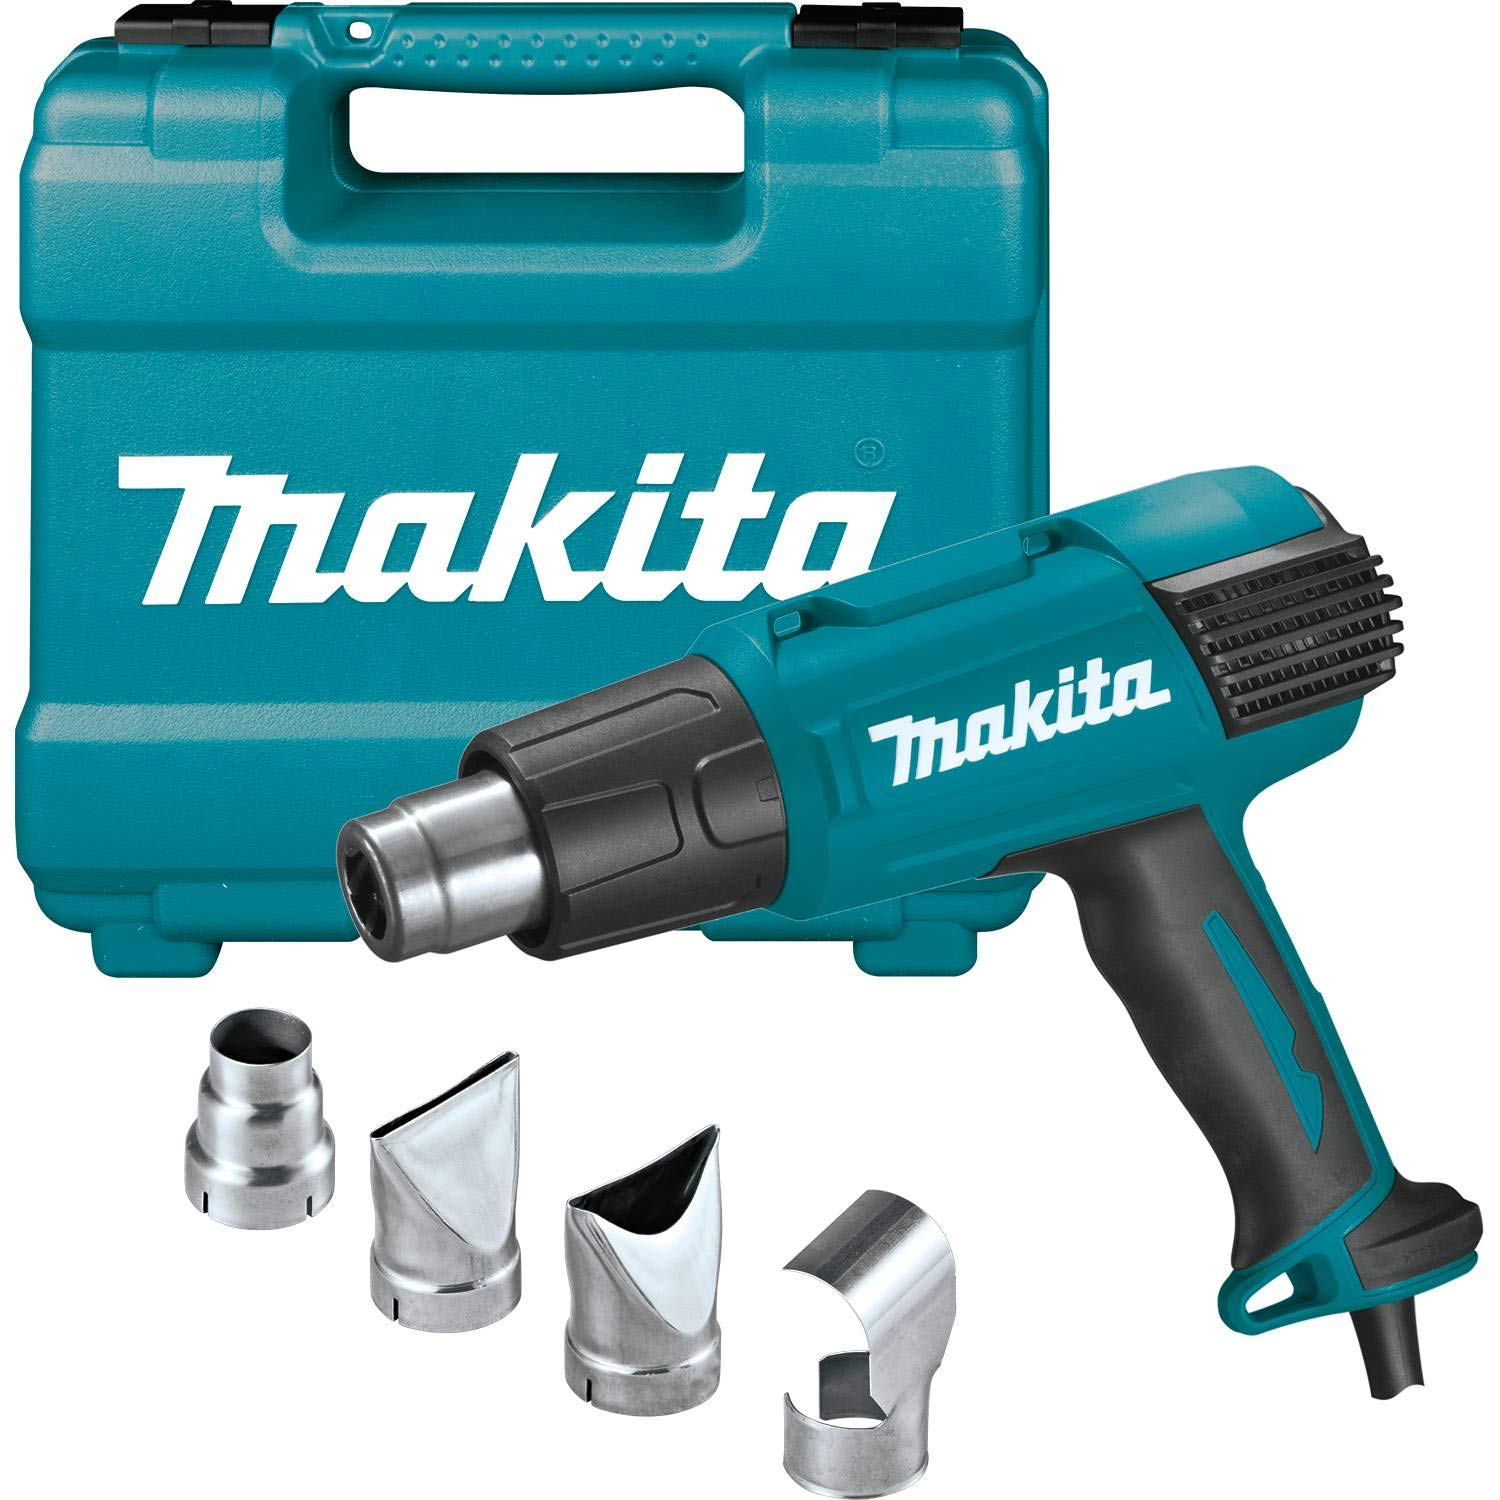 Makita HG6530VK Variable Temperature Heat Gun Kit with LCD Digital Display $129